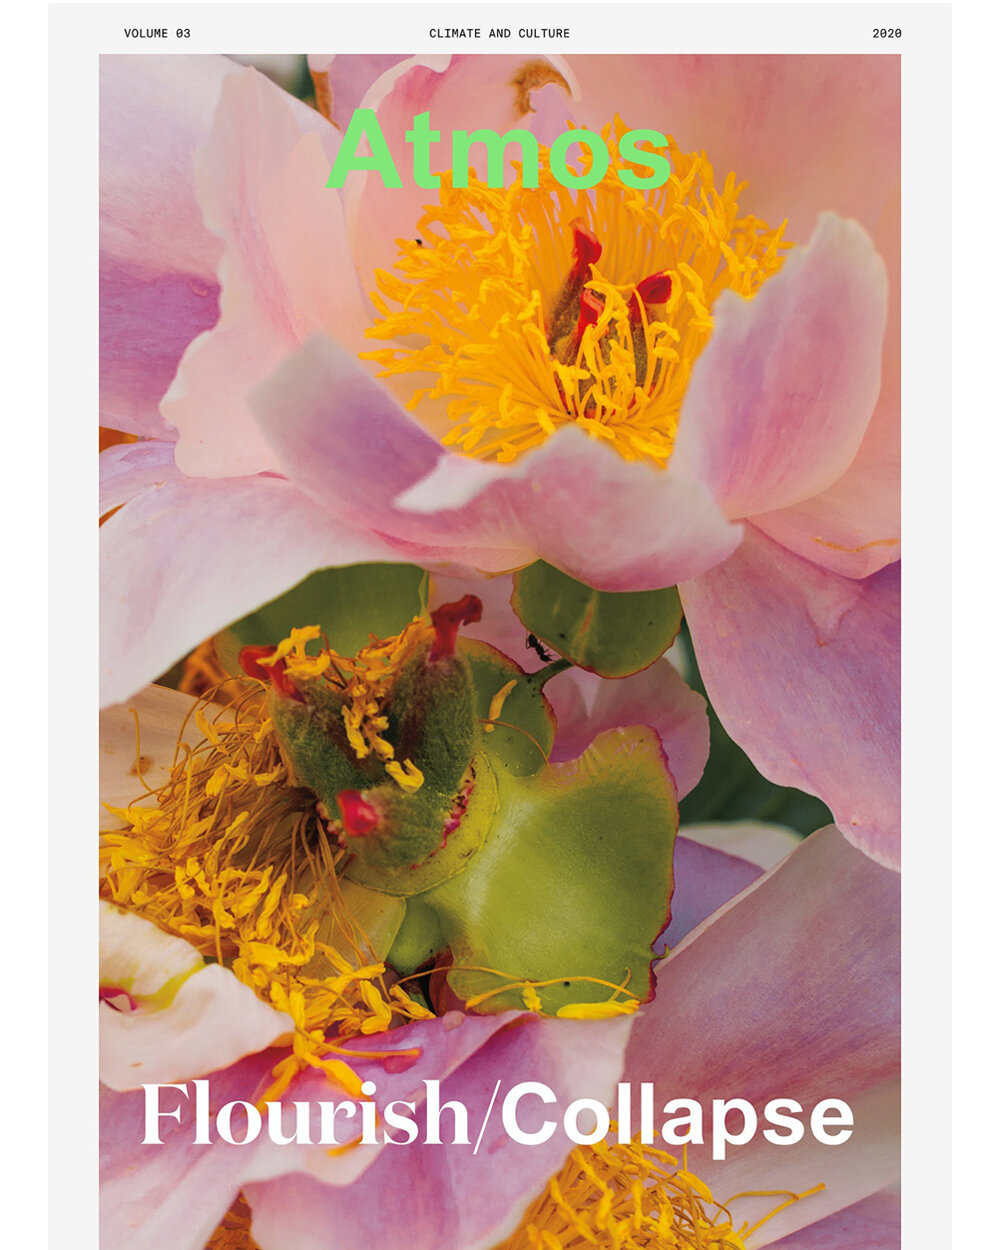 atmos-magazine-pink-flower-flourish-collapse-climate-change.jpg